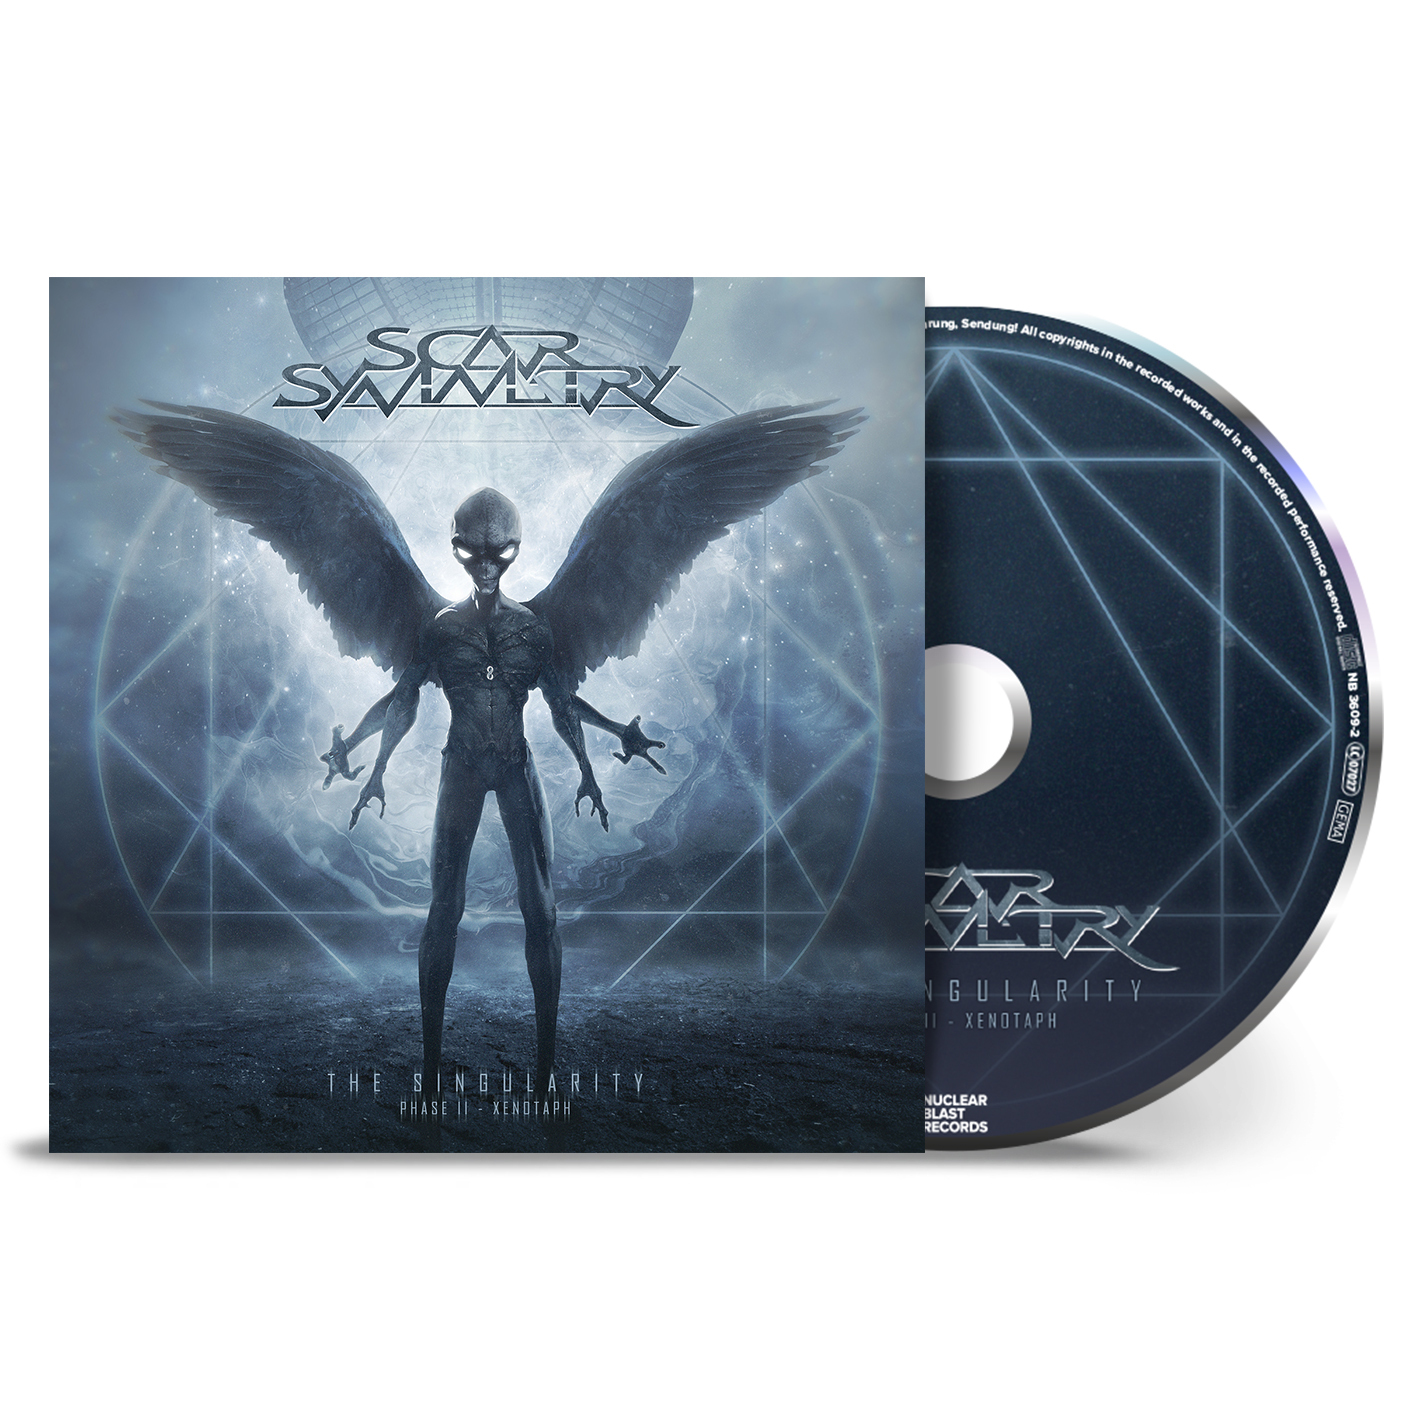 Scar Symmetry The Singularity (Phase II - Xenotaph) (CD) Album - Photo 1/1